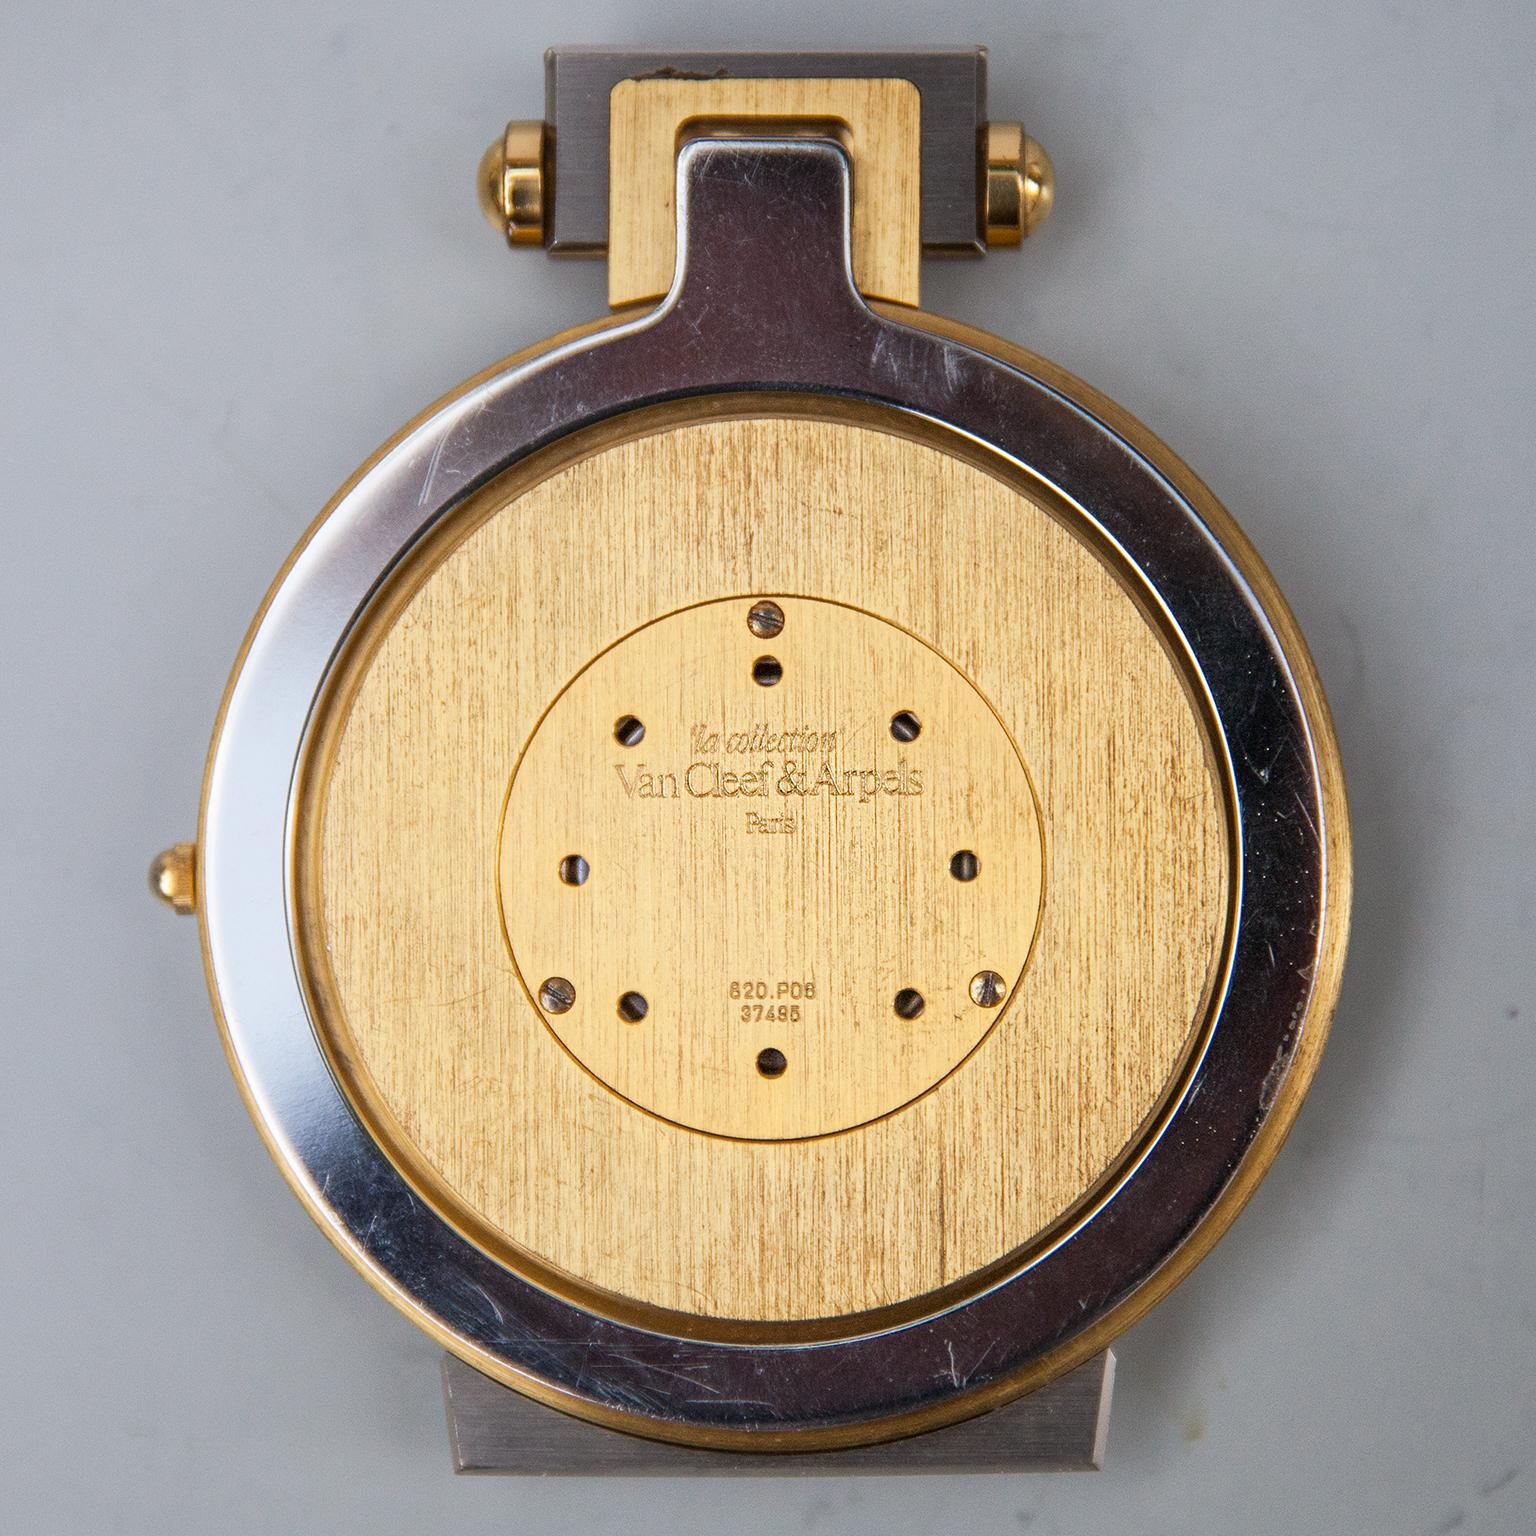 Or Van Cleef And Arpels, horloge de voyage La Collection, années 1990